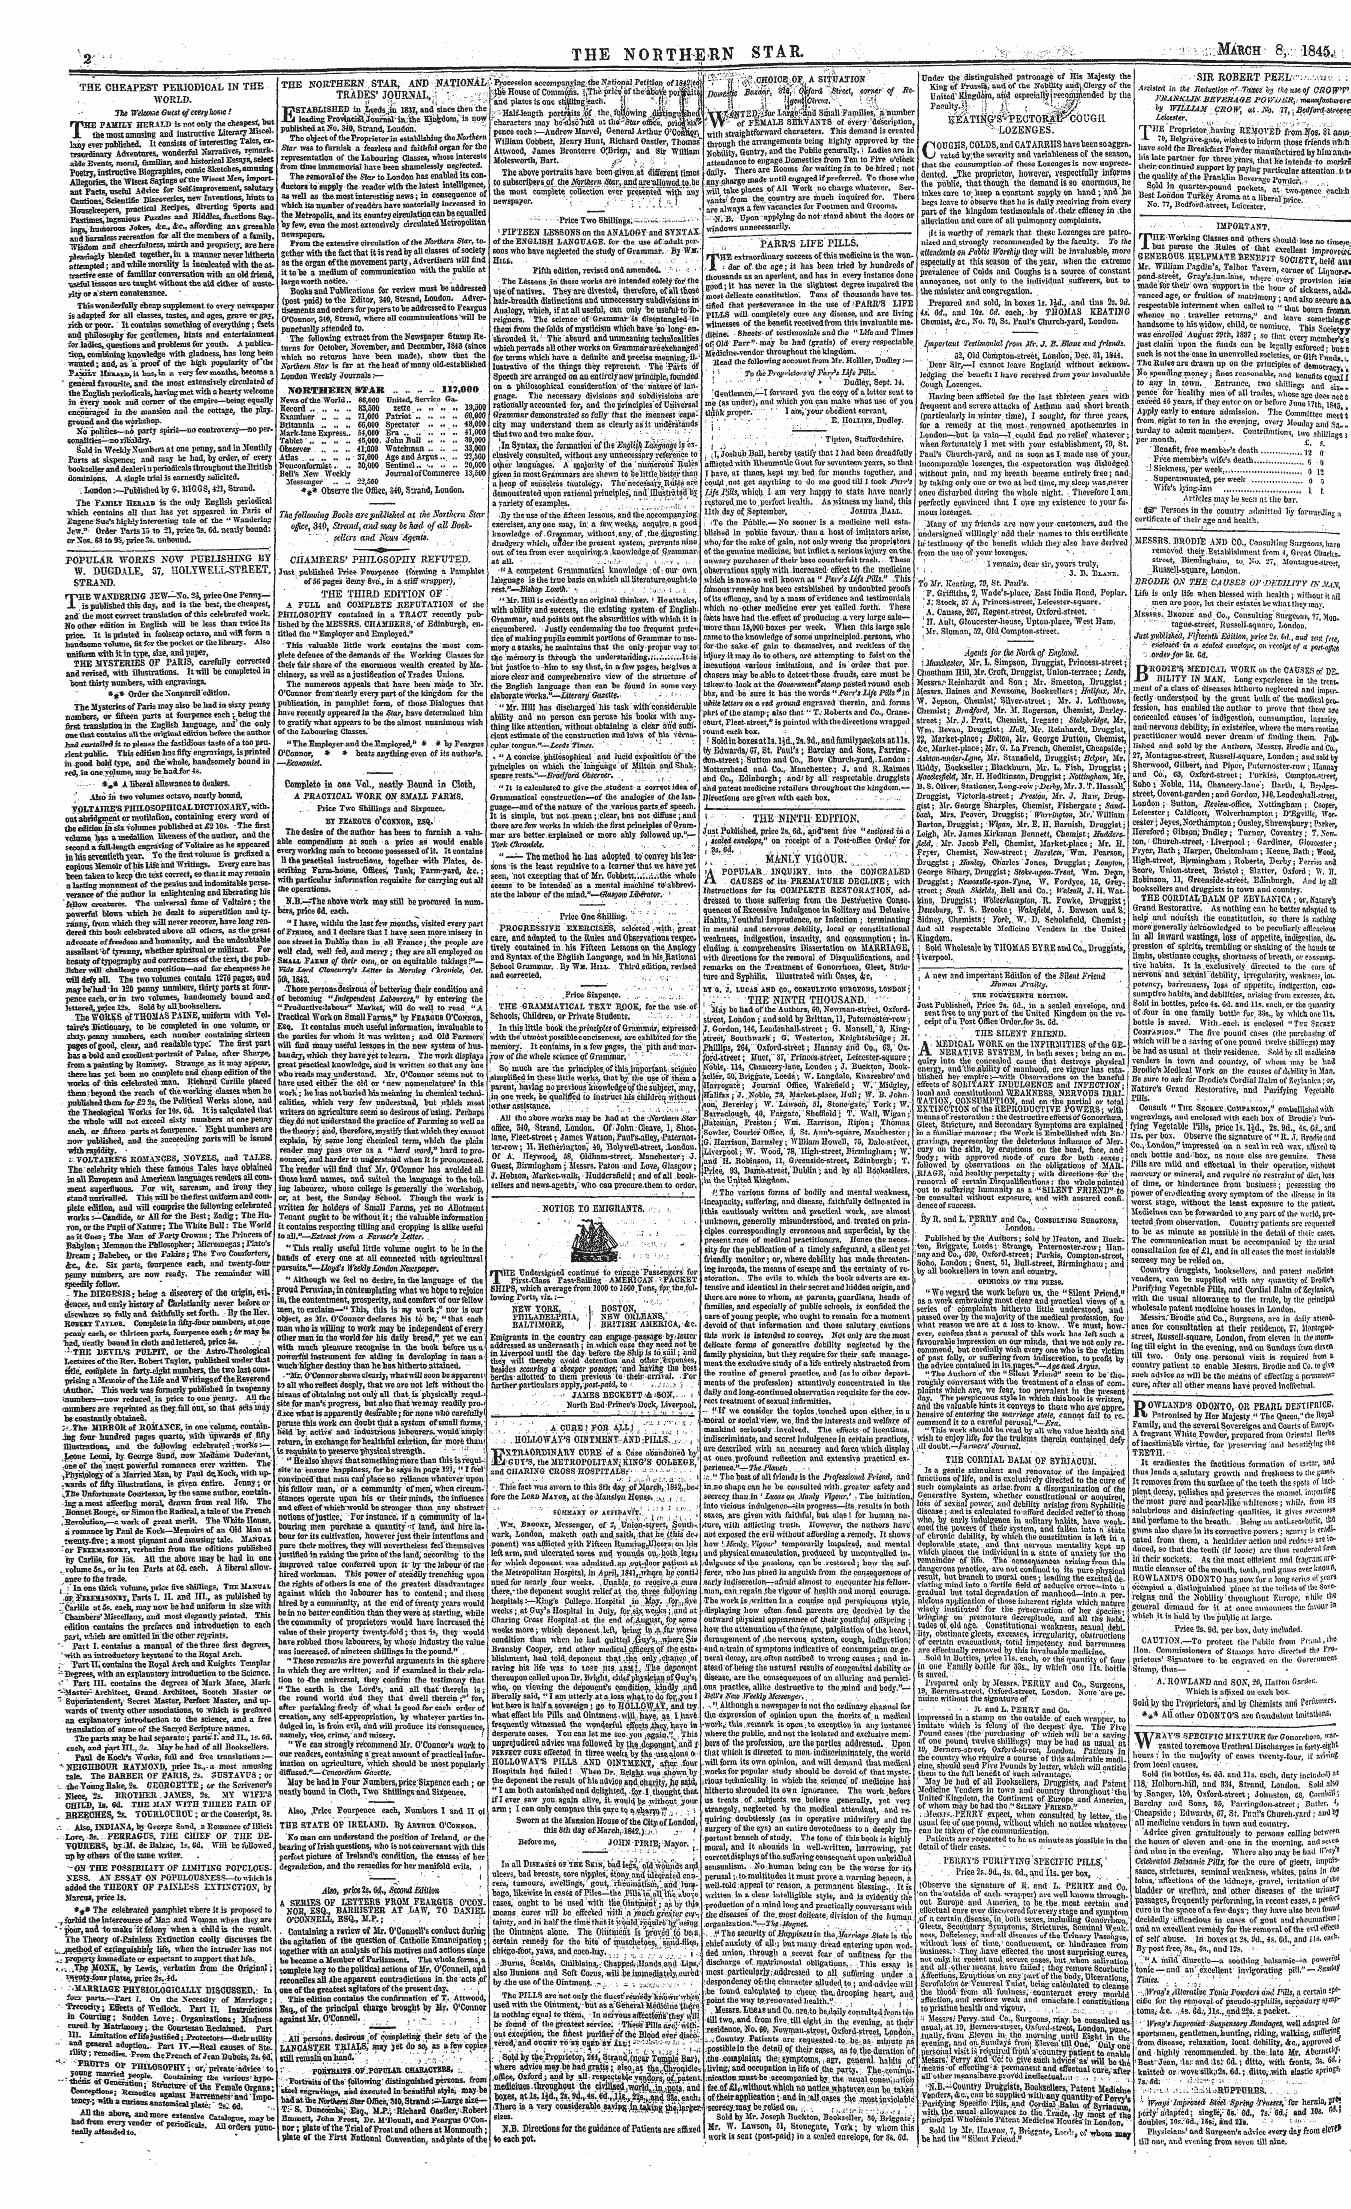 Northern Star (1837-1852): jS F Y, 3rd edition - Ad00214